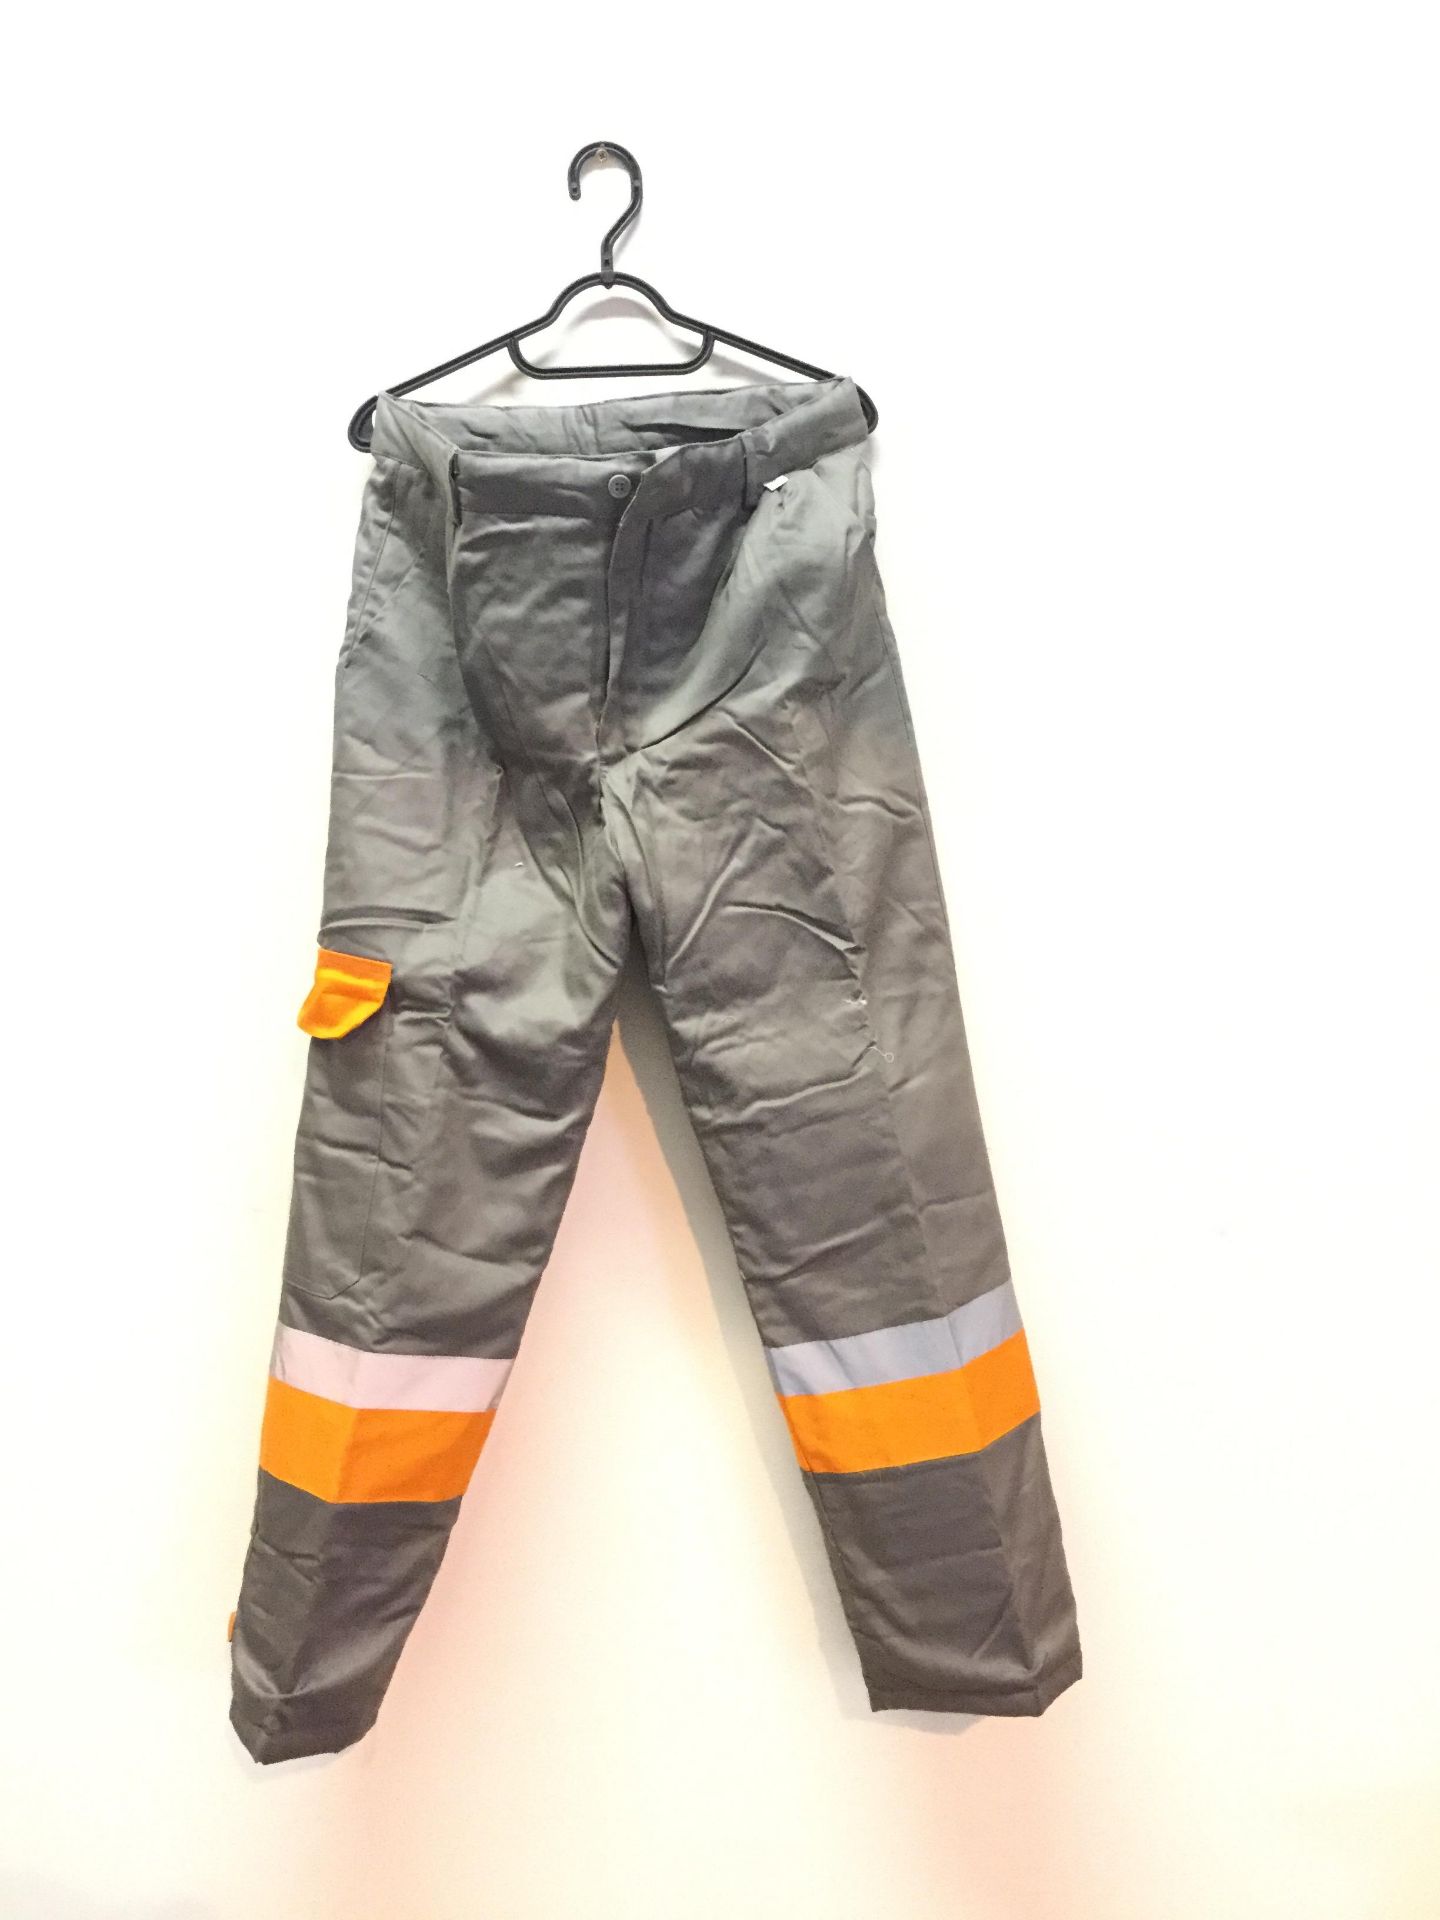 Flame Retardant Winter Trousers - Size 52